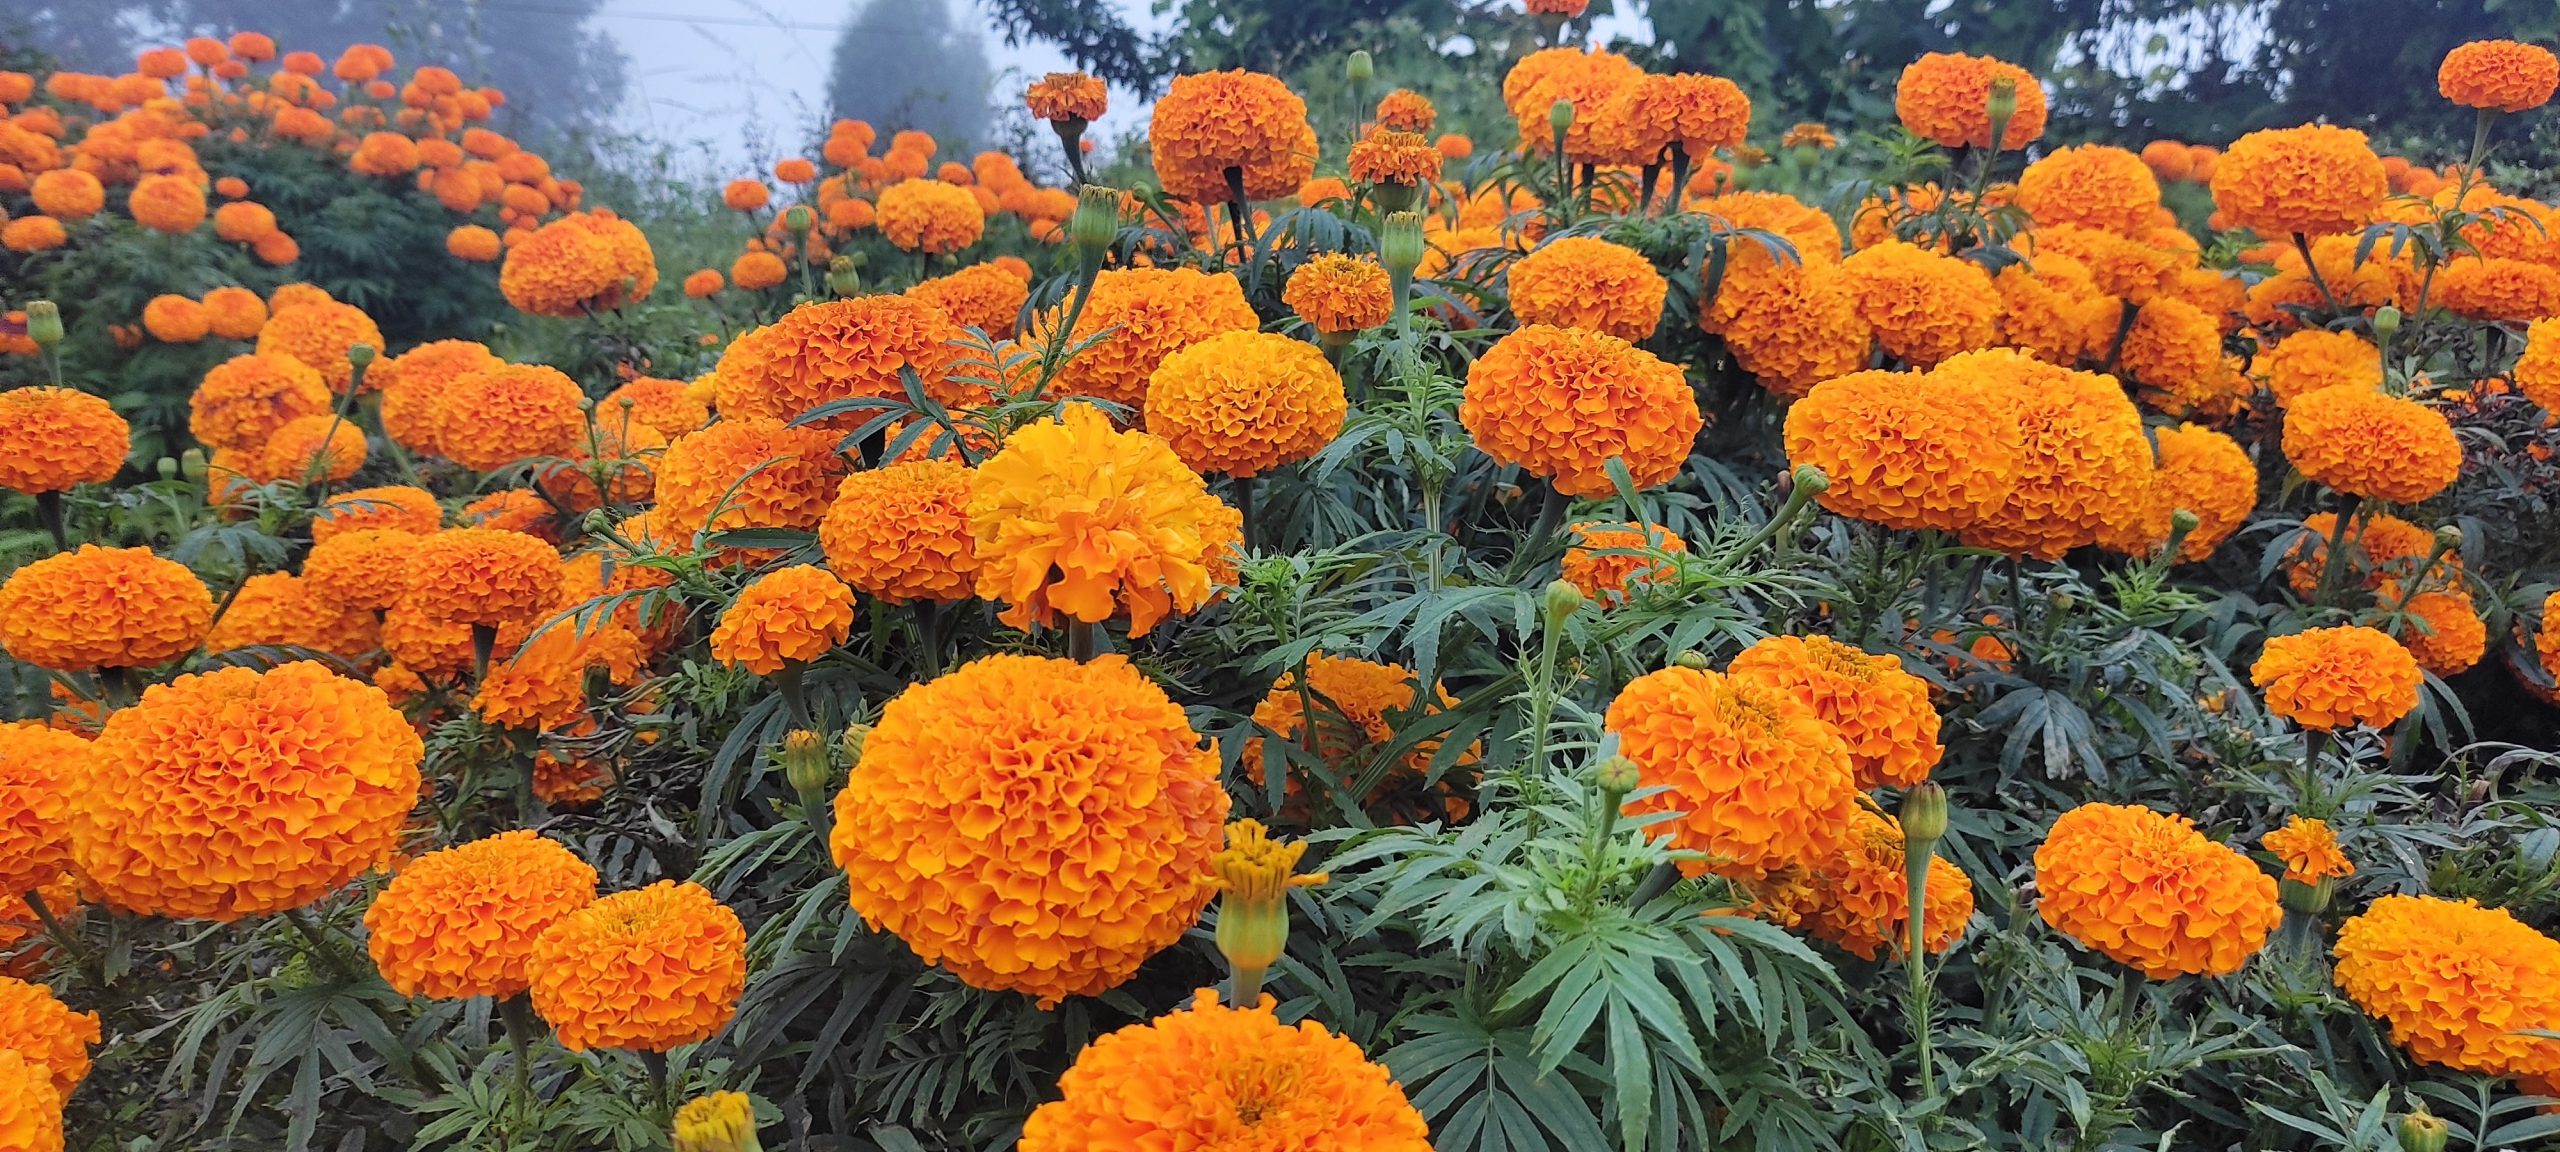 Marigold Seed: Grow sunshine in your garden